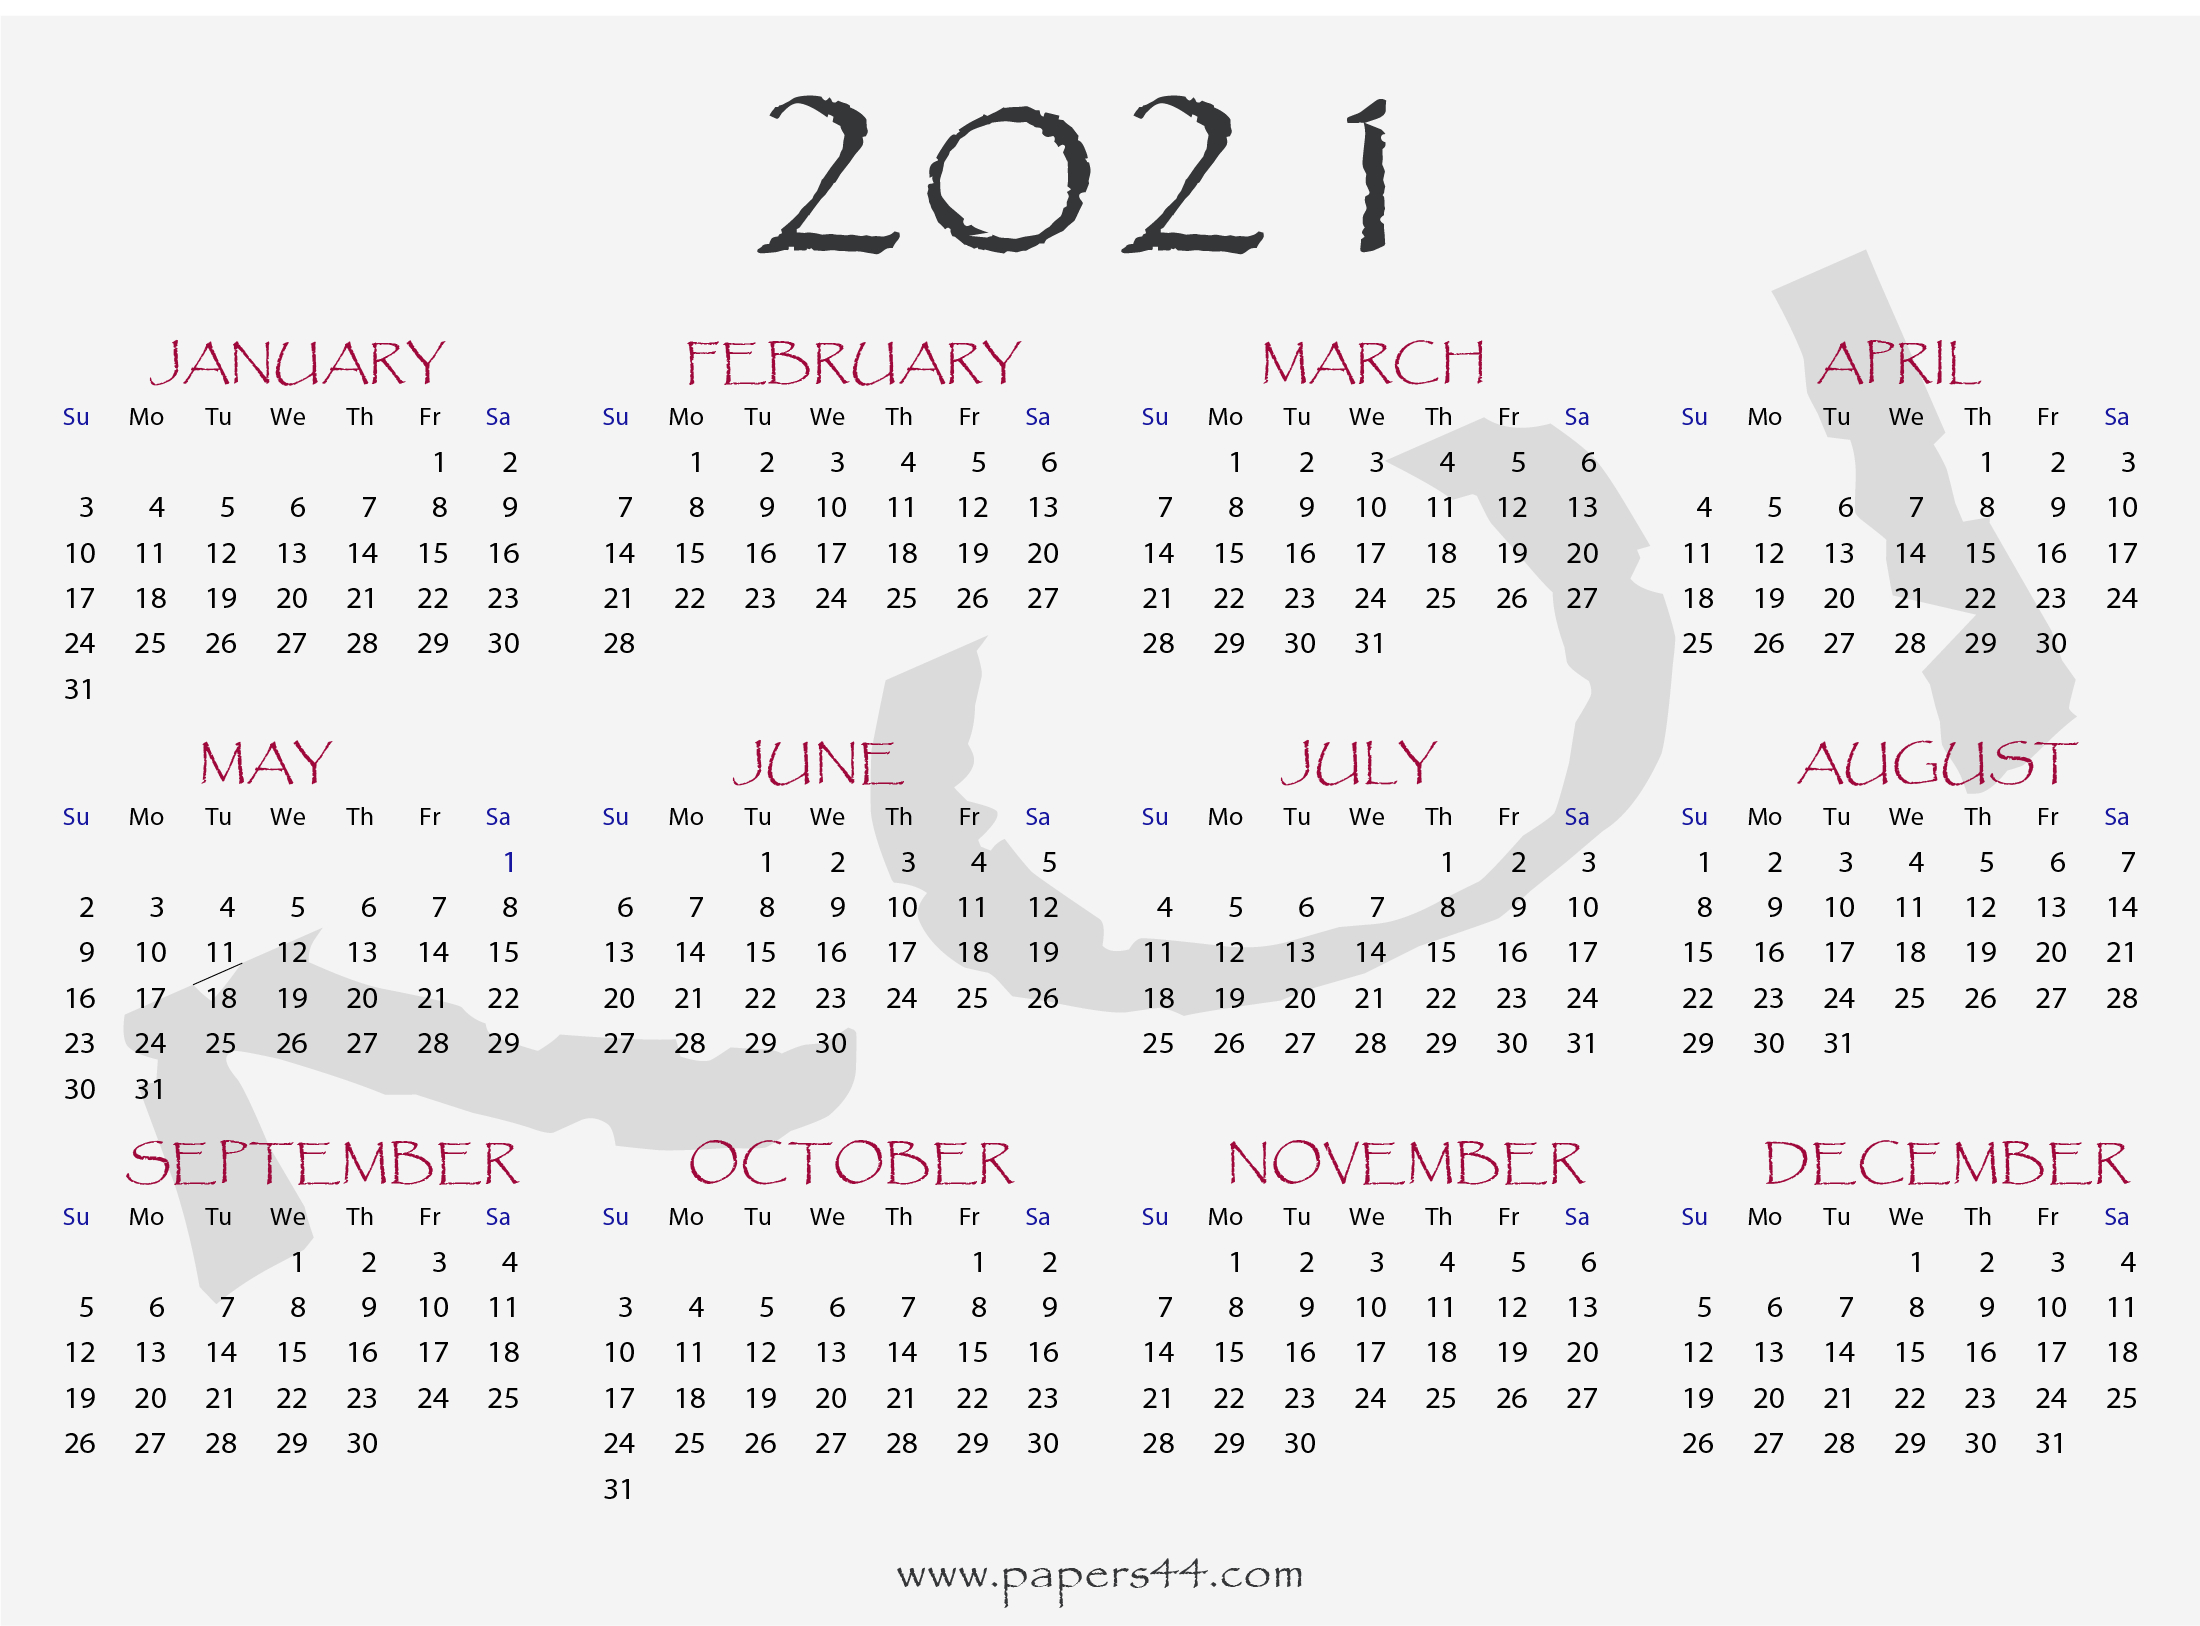 2021 calendar download templates